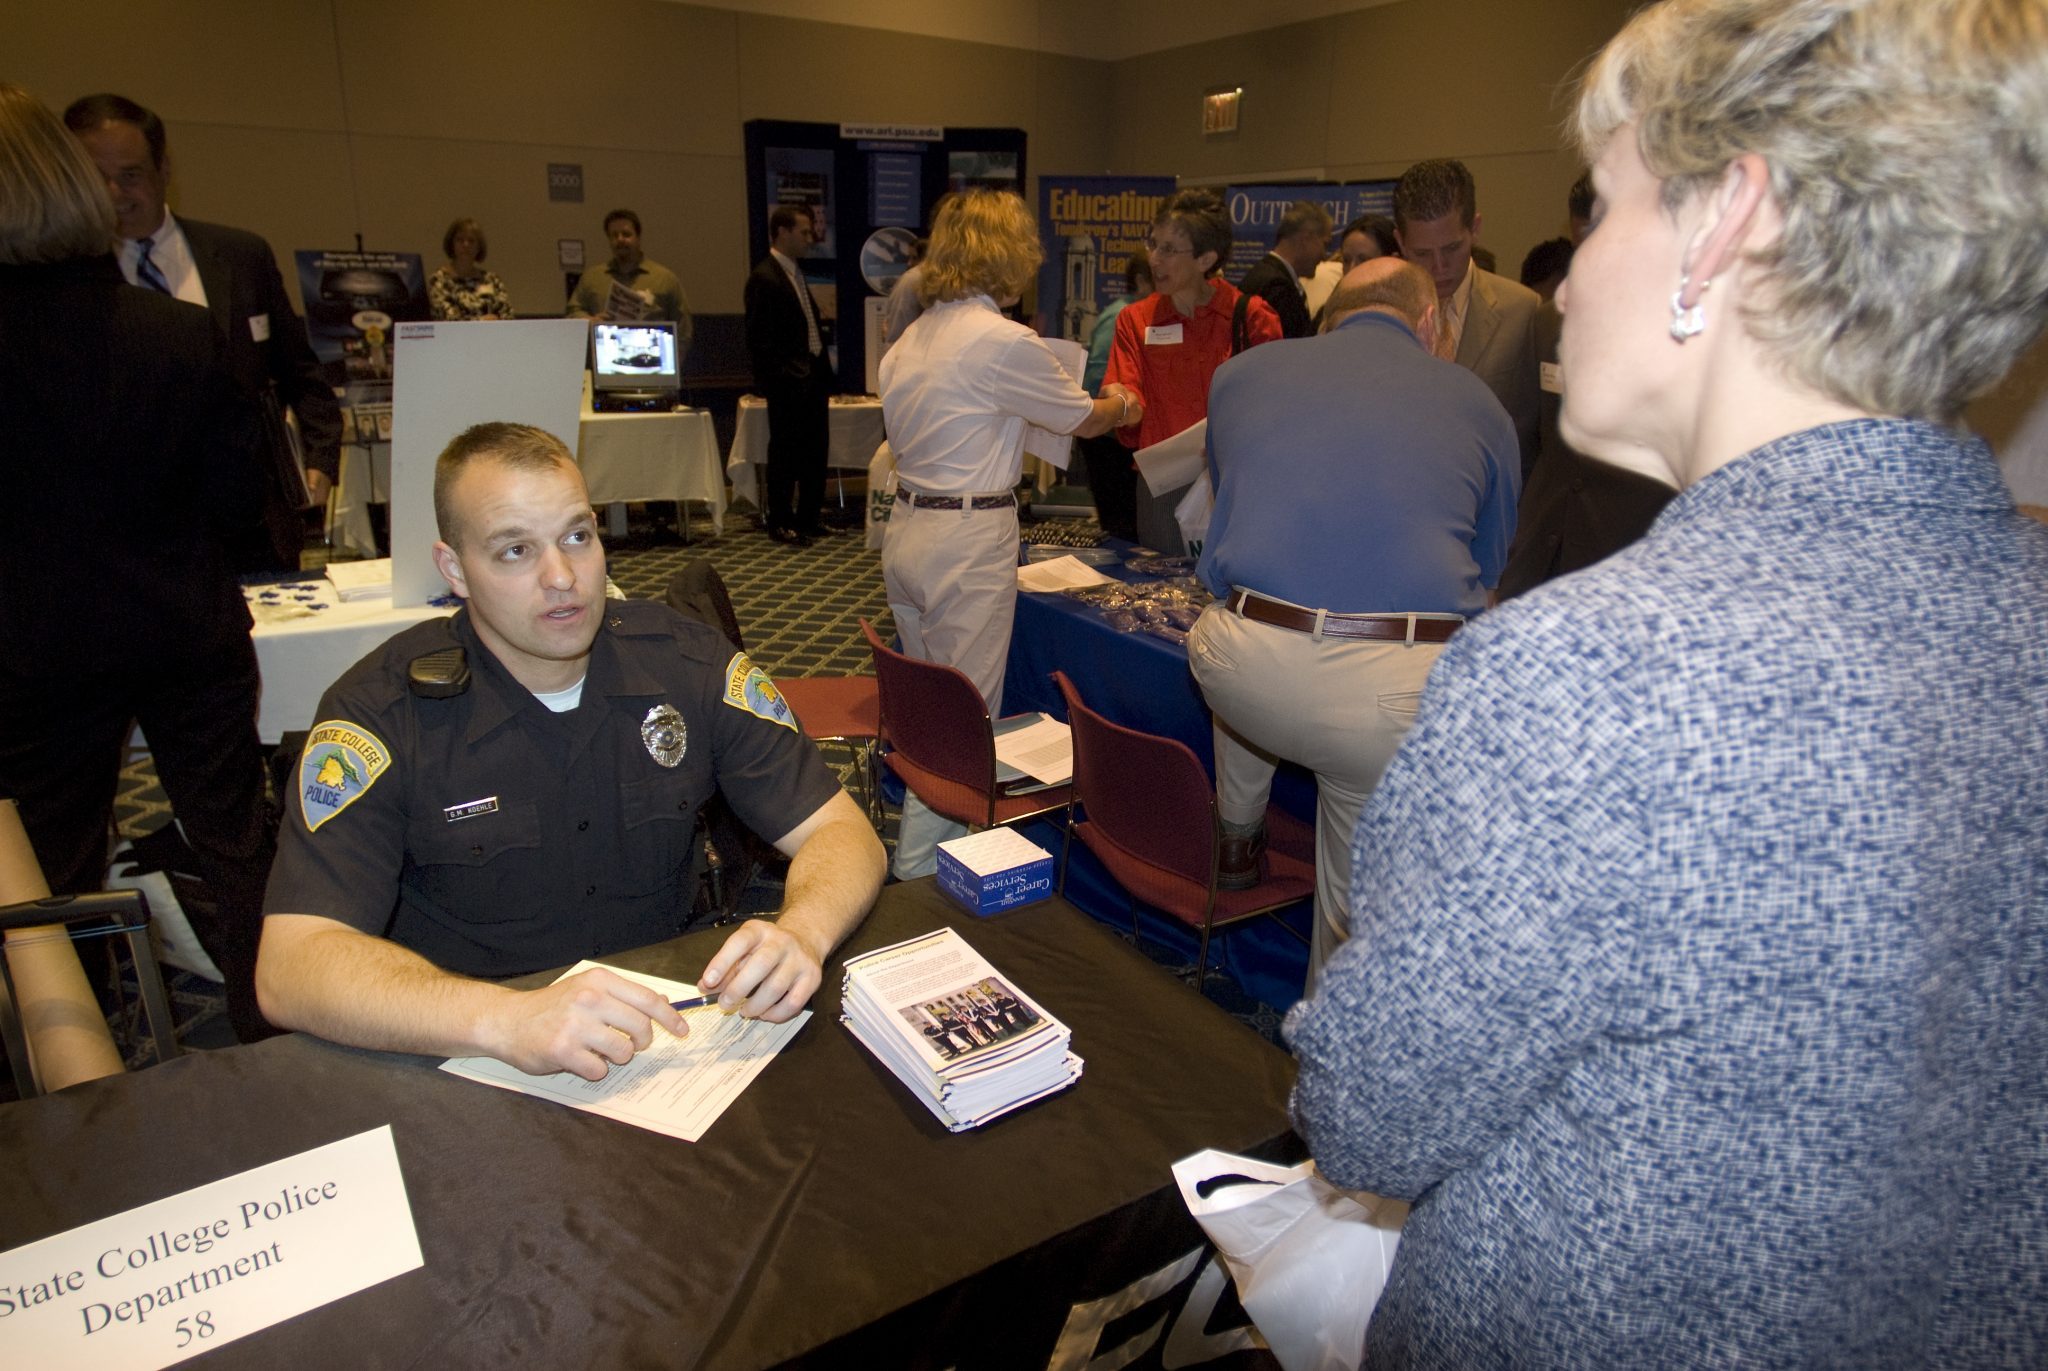 Police officer jobs hiring in illinois